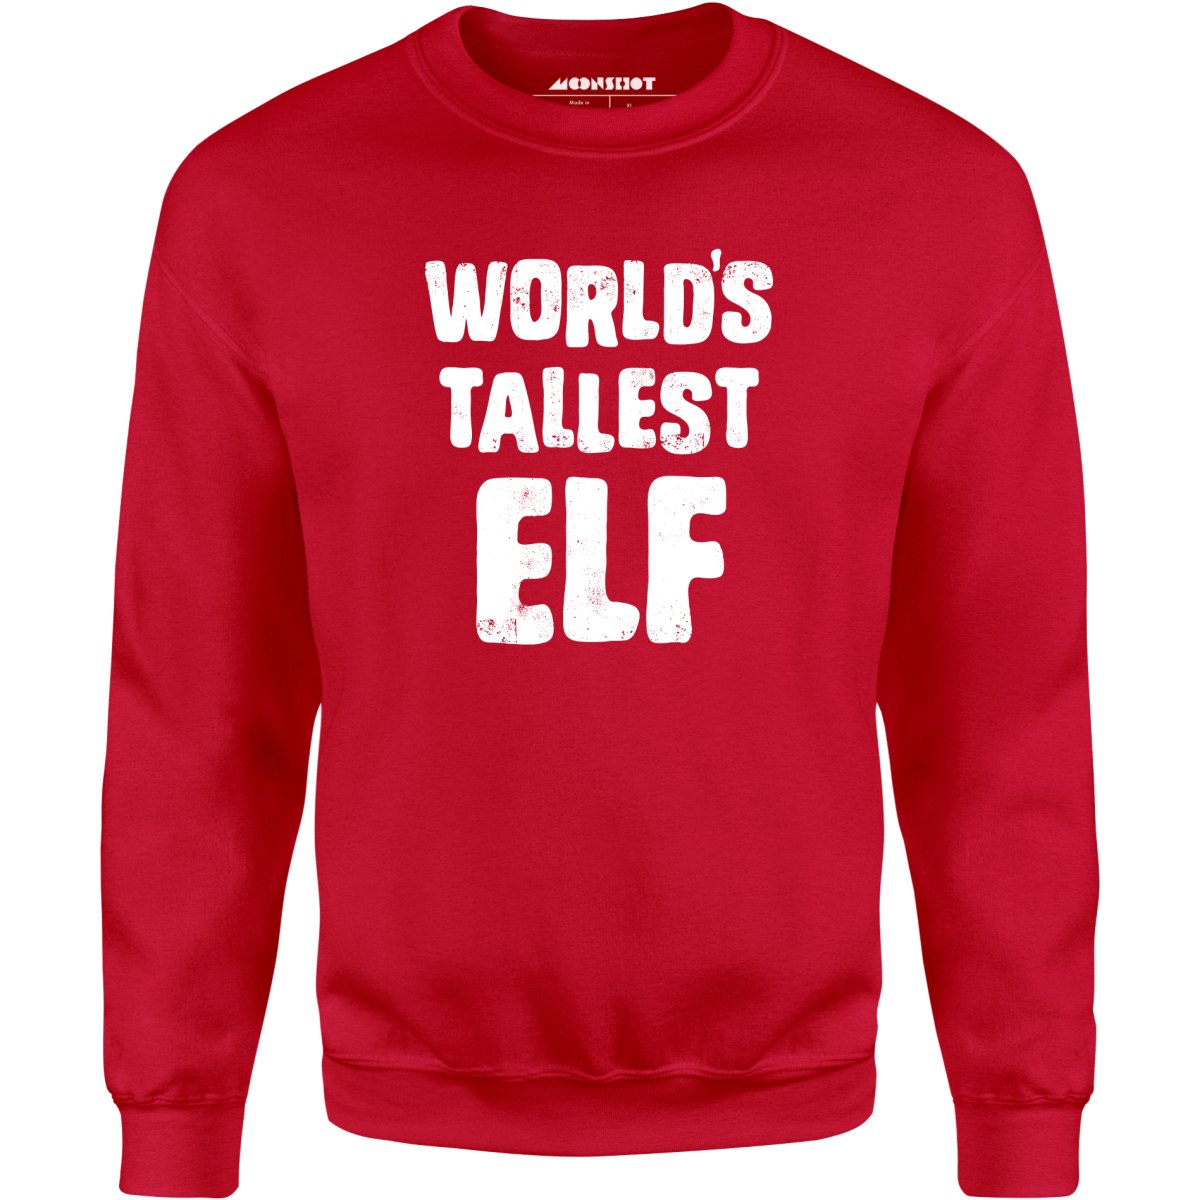 World's Tallest Elf - Unisex Sweatshirt